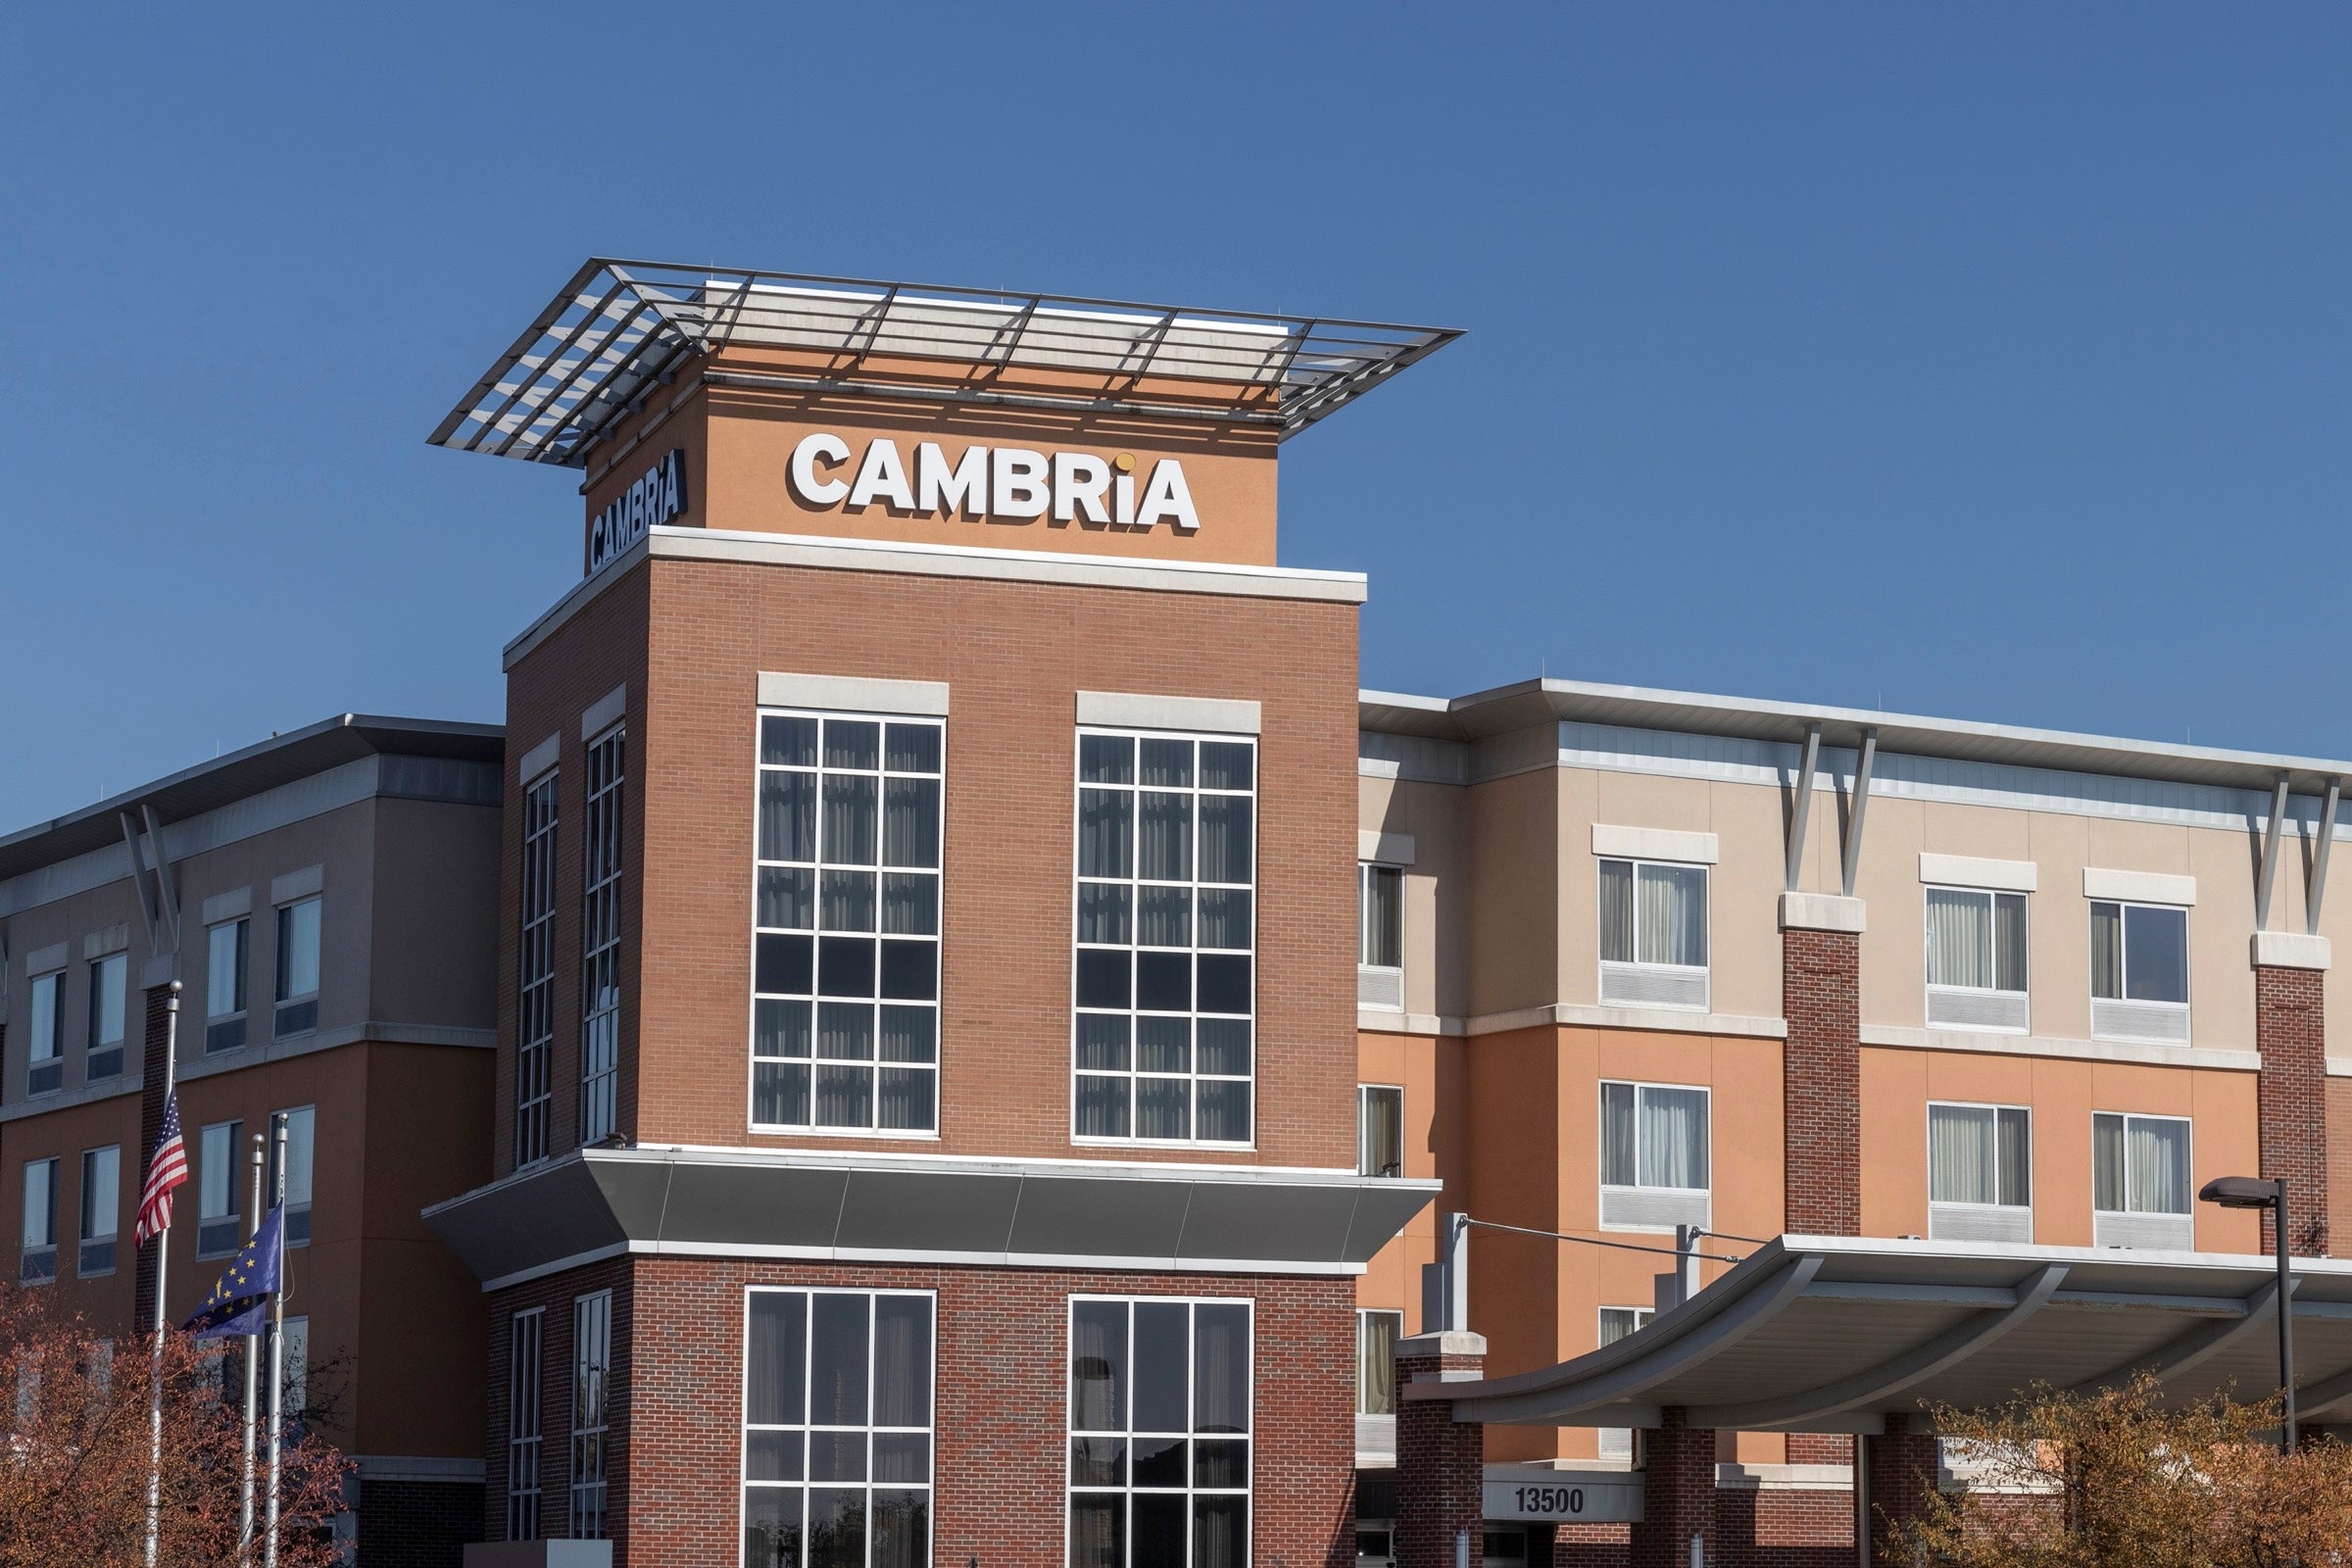 Cambria Hotels location in Noblesville